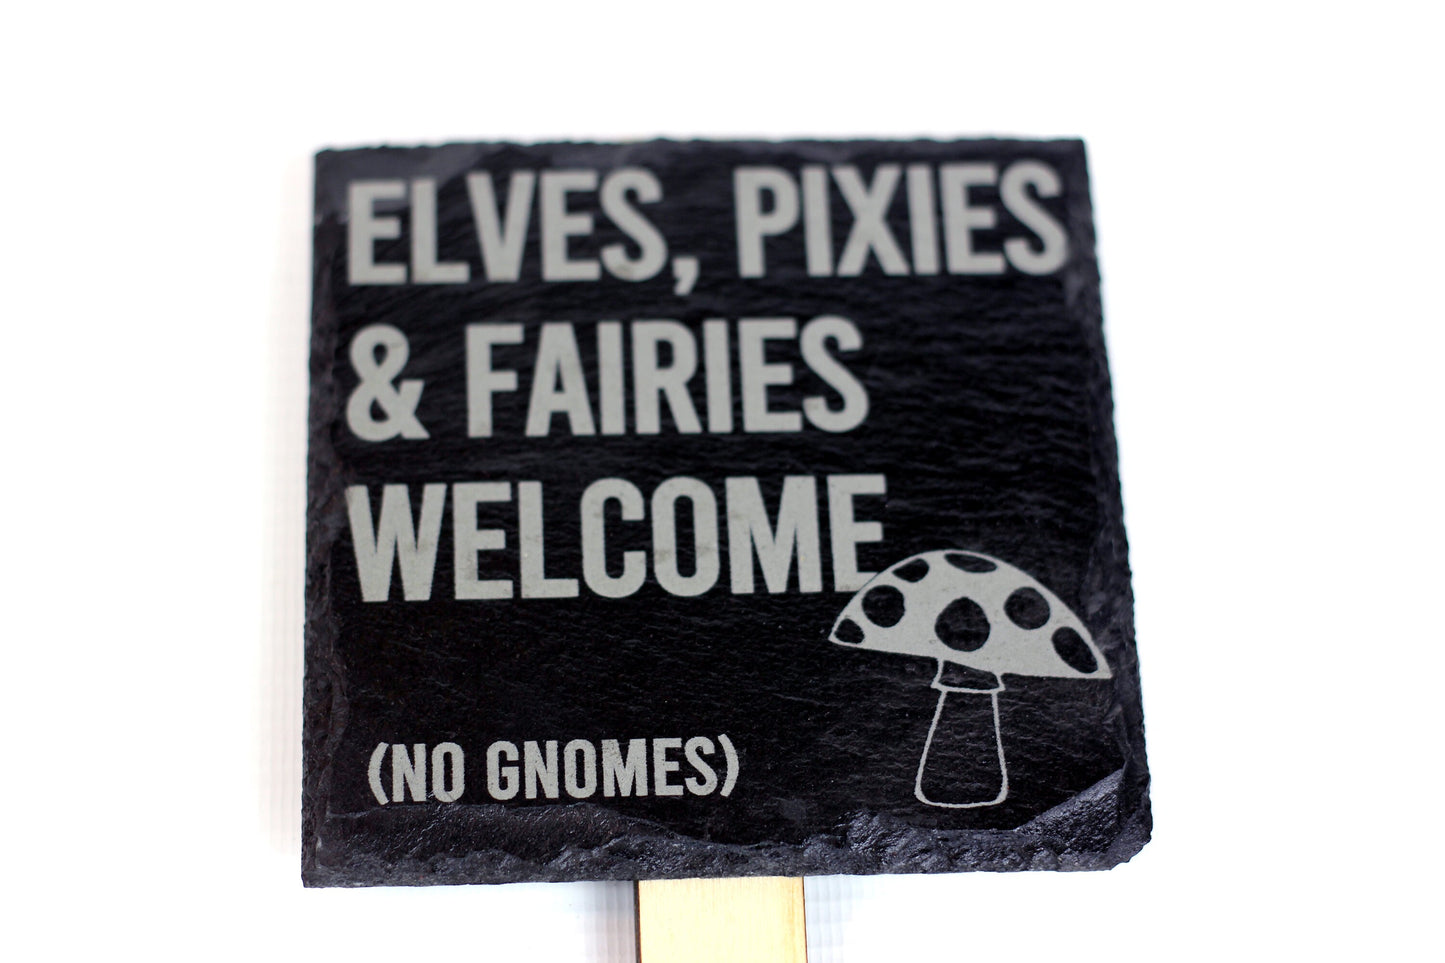 Fun slate garden sign, "Elves, pixies & fairies welcome, no gnomes", great for fantasy garden decoration in flower pots, kids garden gift.